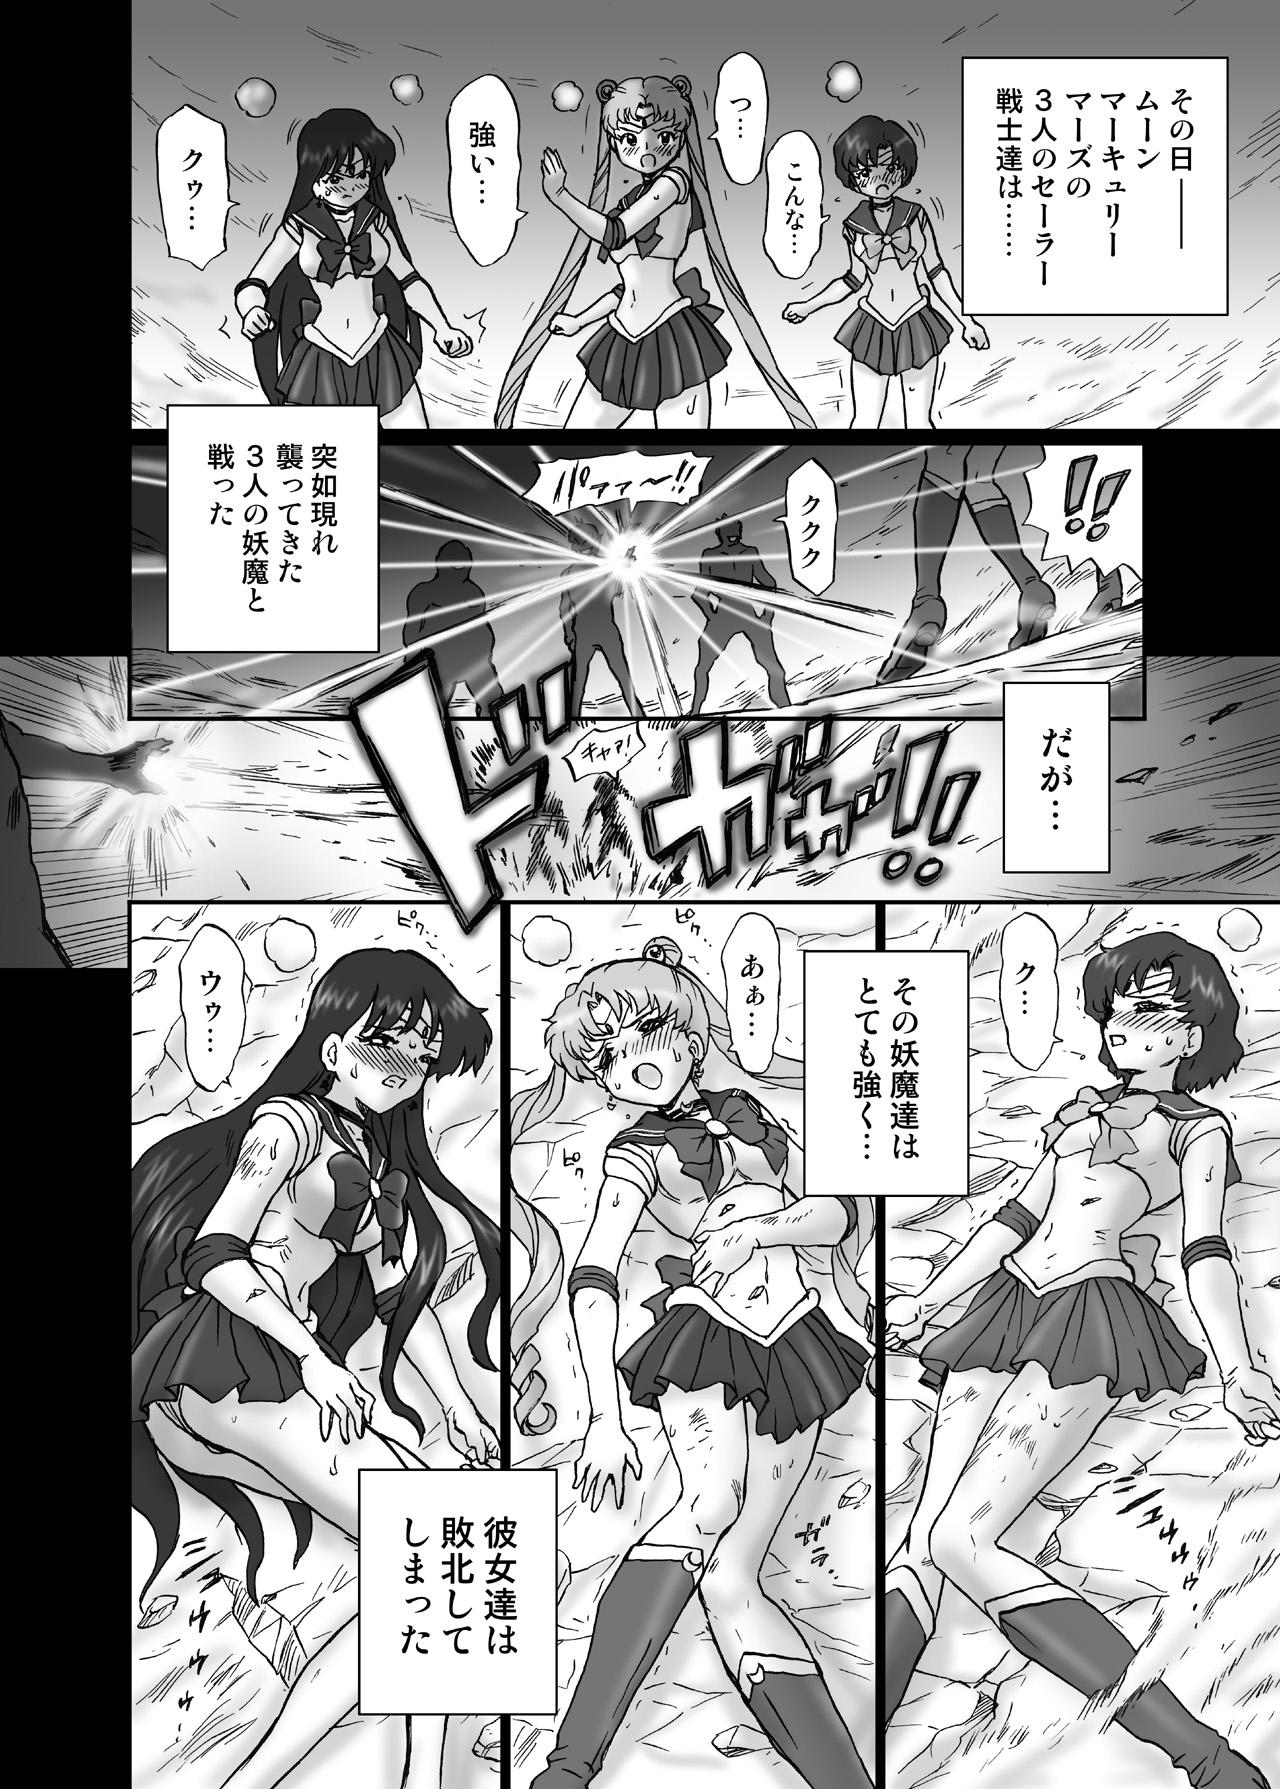 Negra IRIE YAMAZAKI "Sailor Moon" Anal & Scatolo Sakuhinshuu Ver. 1 - Sailor moon Blackmail - Page 3